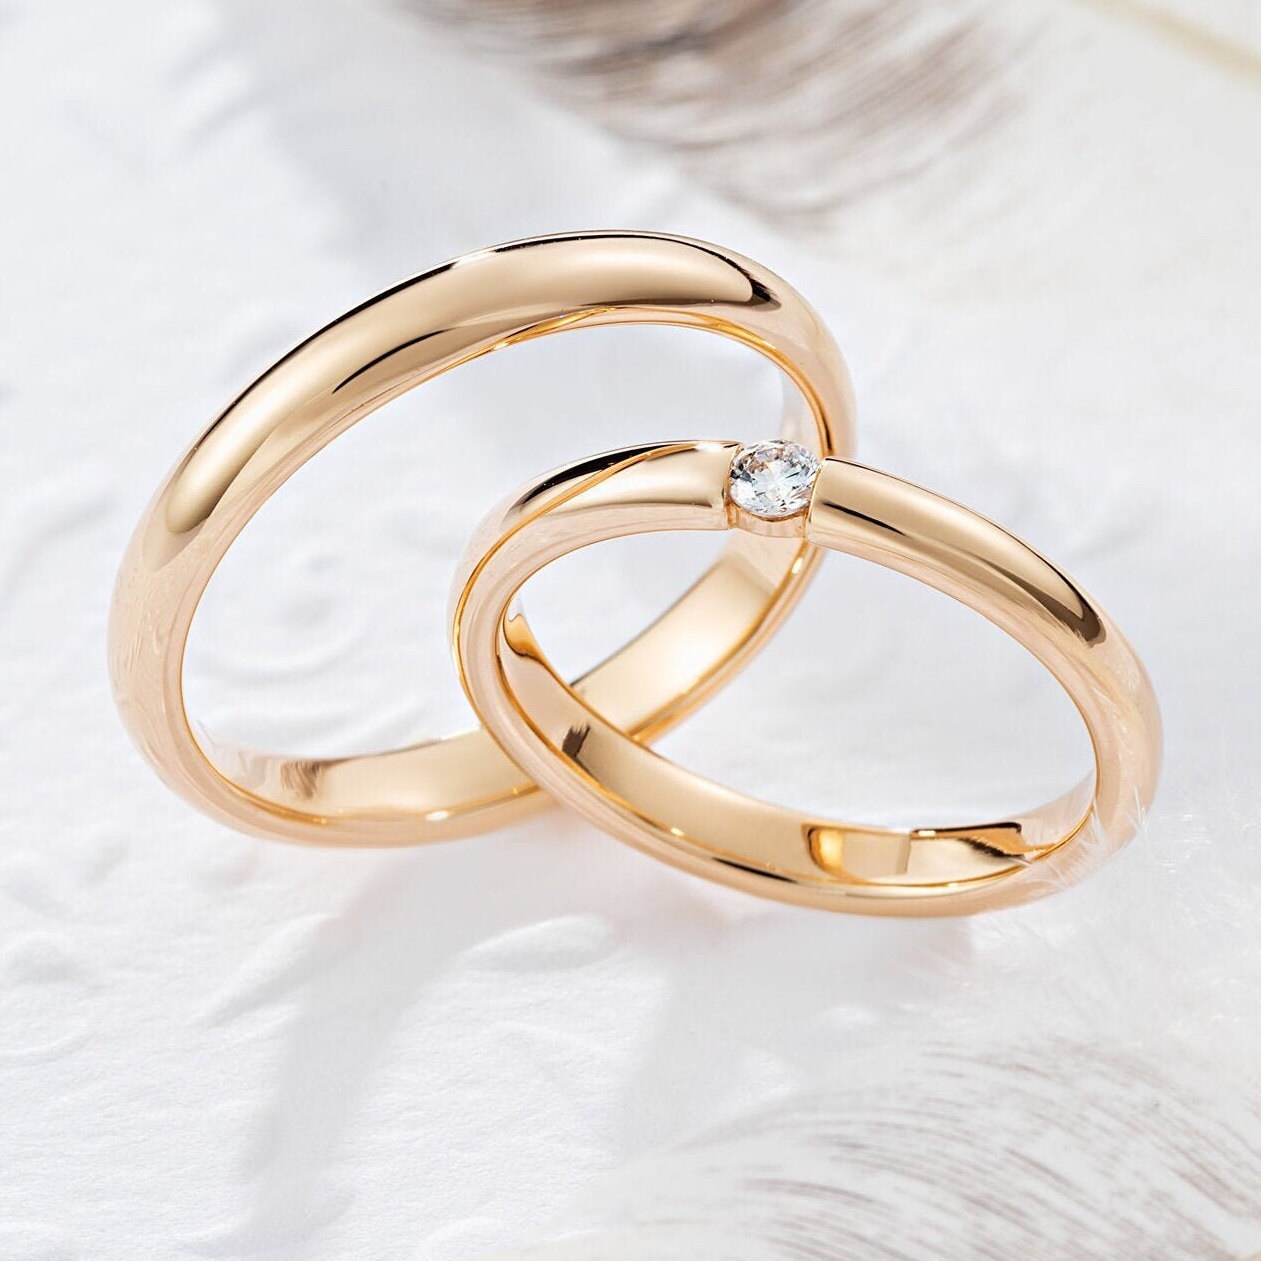 Engagemen Wedding Ring Set Wedding Band Set Sterling Silver 5A CZ Ring  Jewelry 7 | eBay